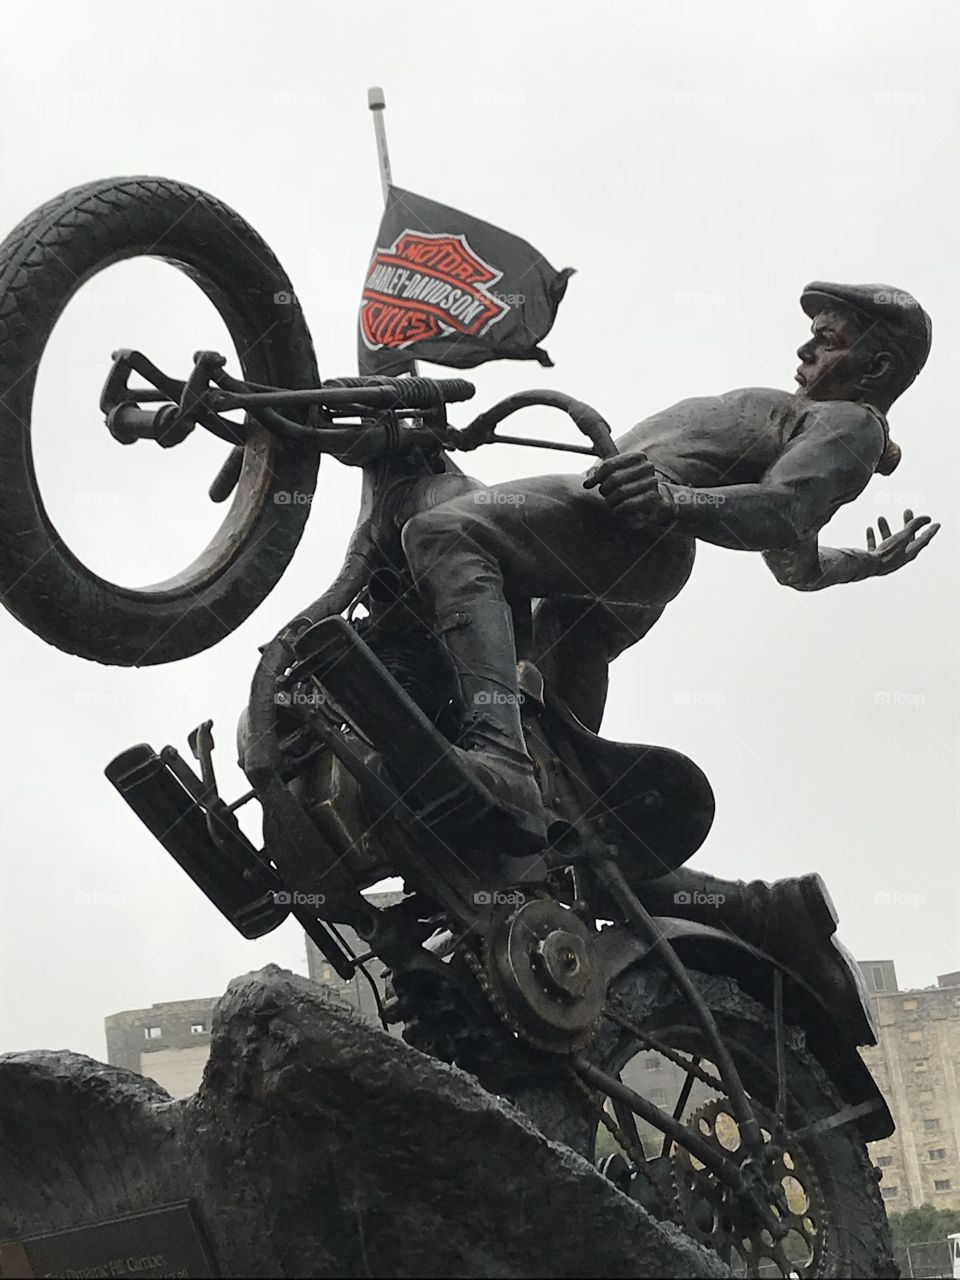 Amazing Harley Davidson Museum sculpture 